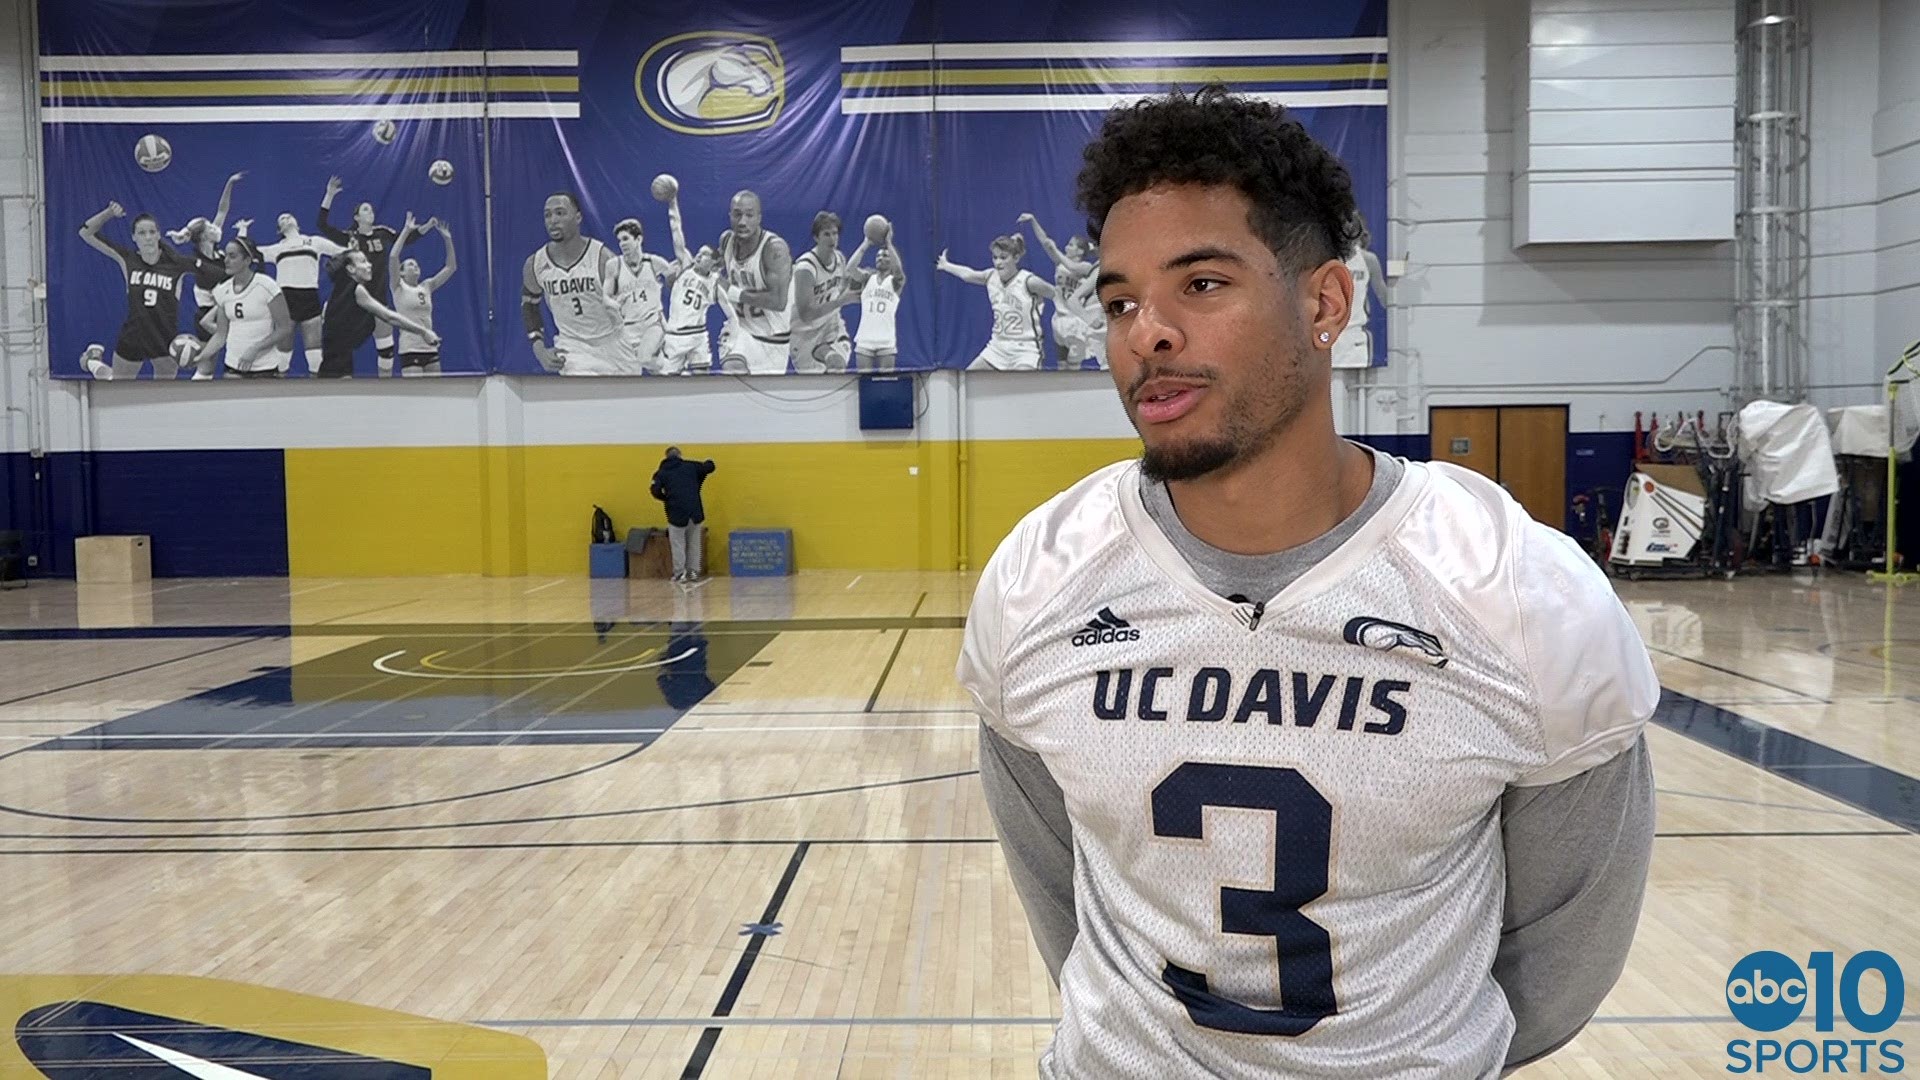 ABC10's Lina Washington interviews UC Davis Aggies star football player Keelan Doss ahead of the FCS Playoffs.